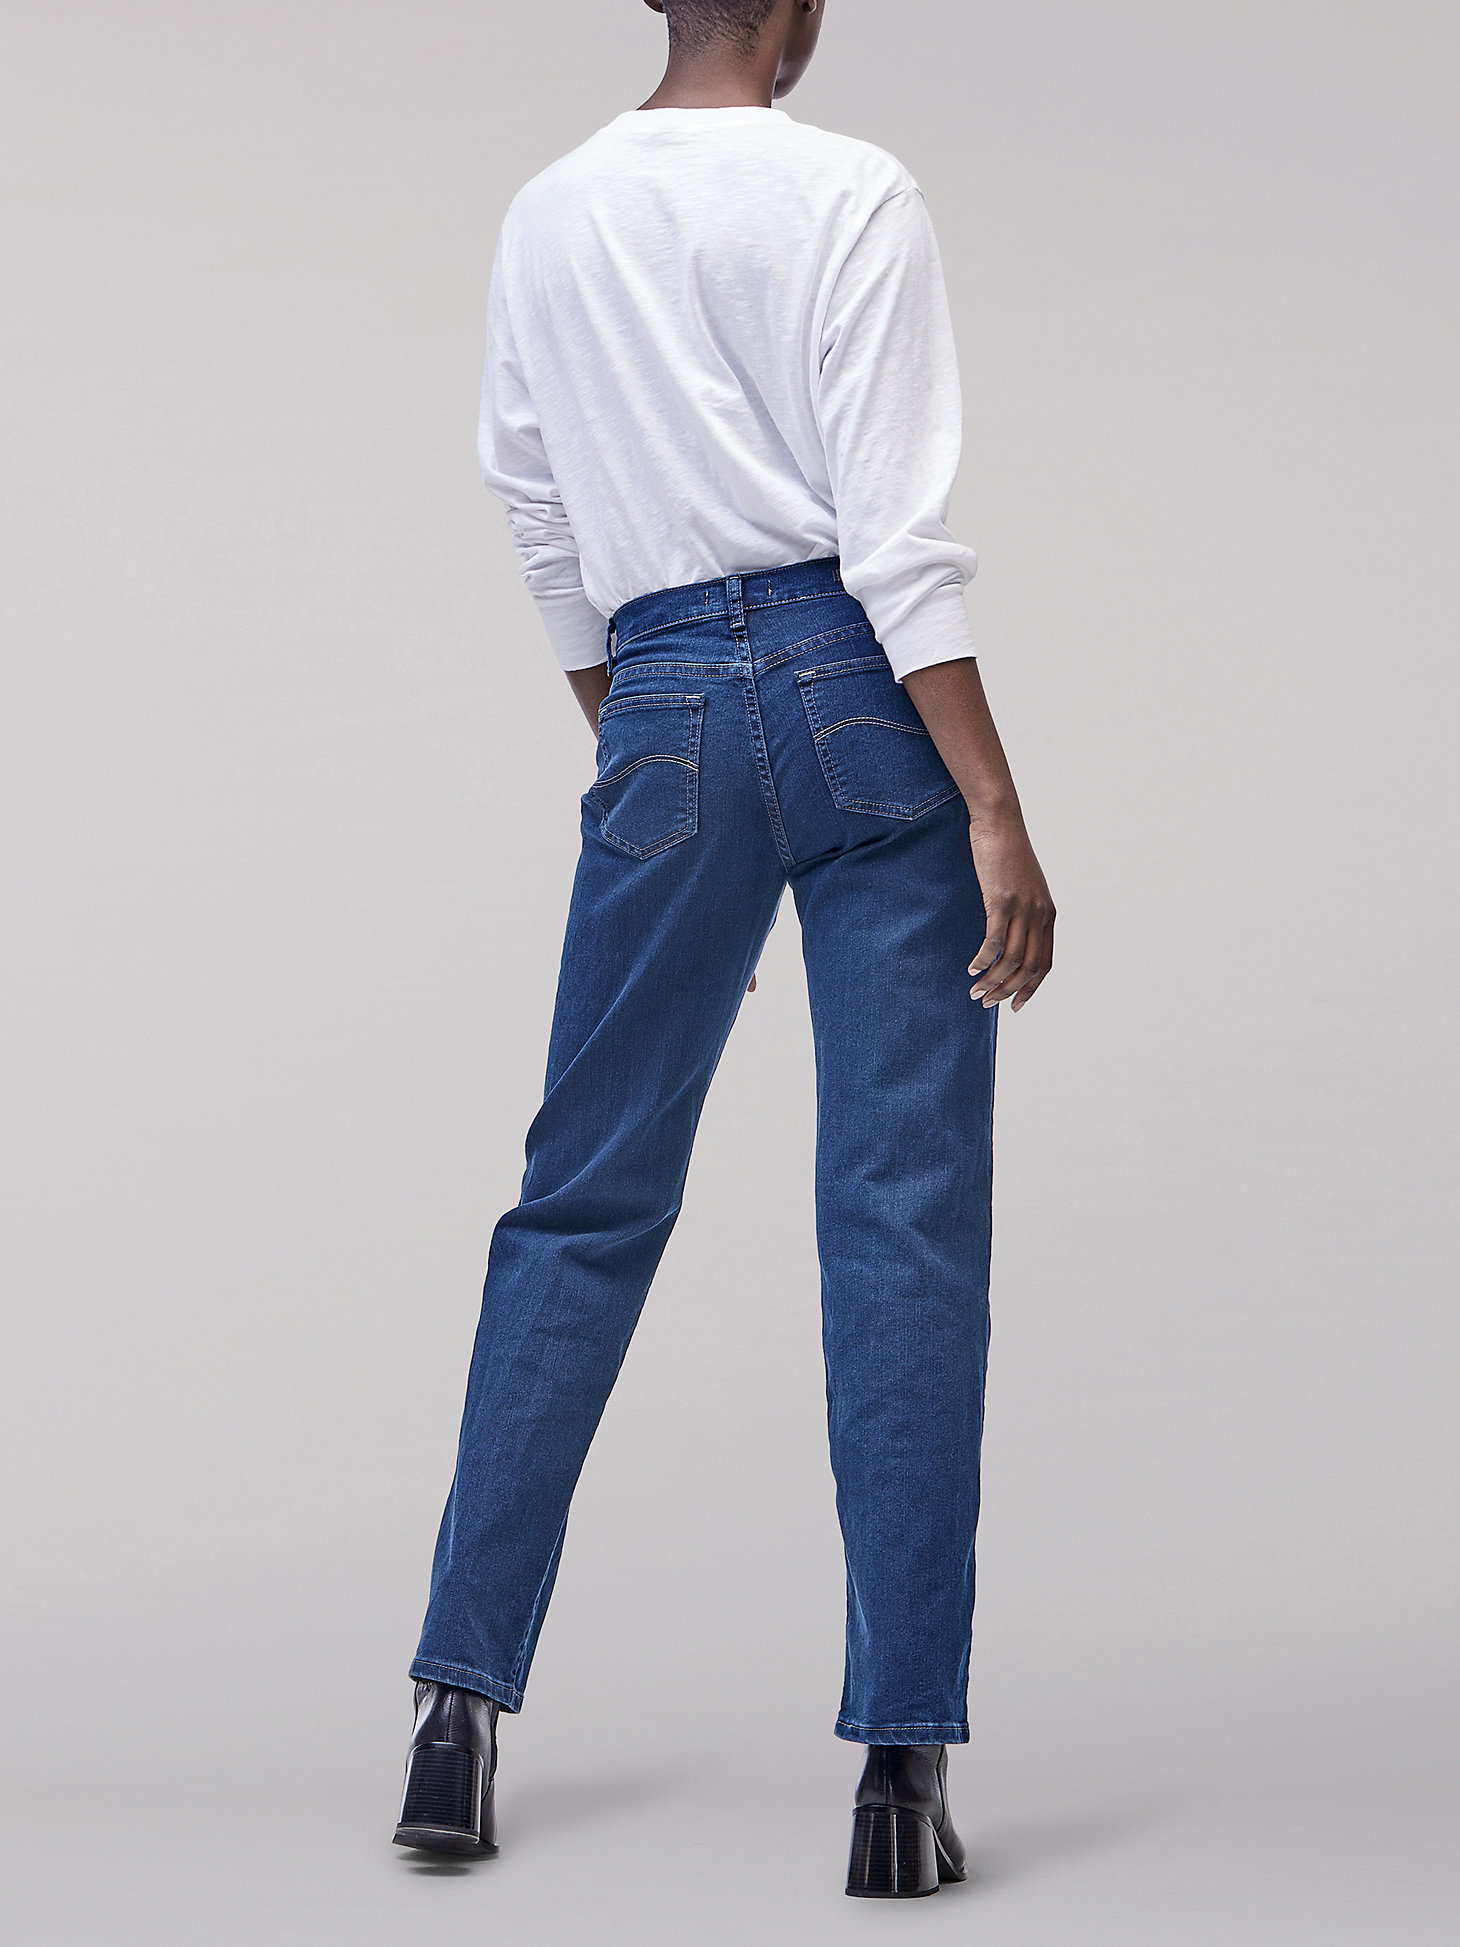 Women’s Original Relaxed Fit Straight Leg Jeans (Petite) in Premium Dark alternative view 2